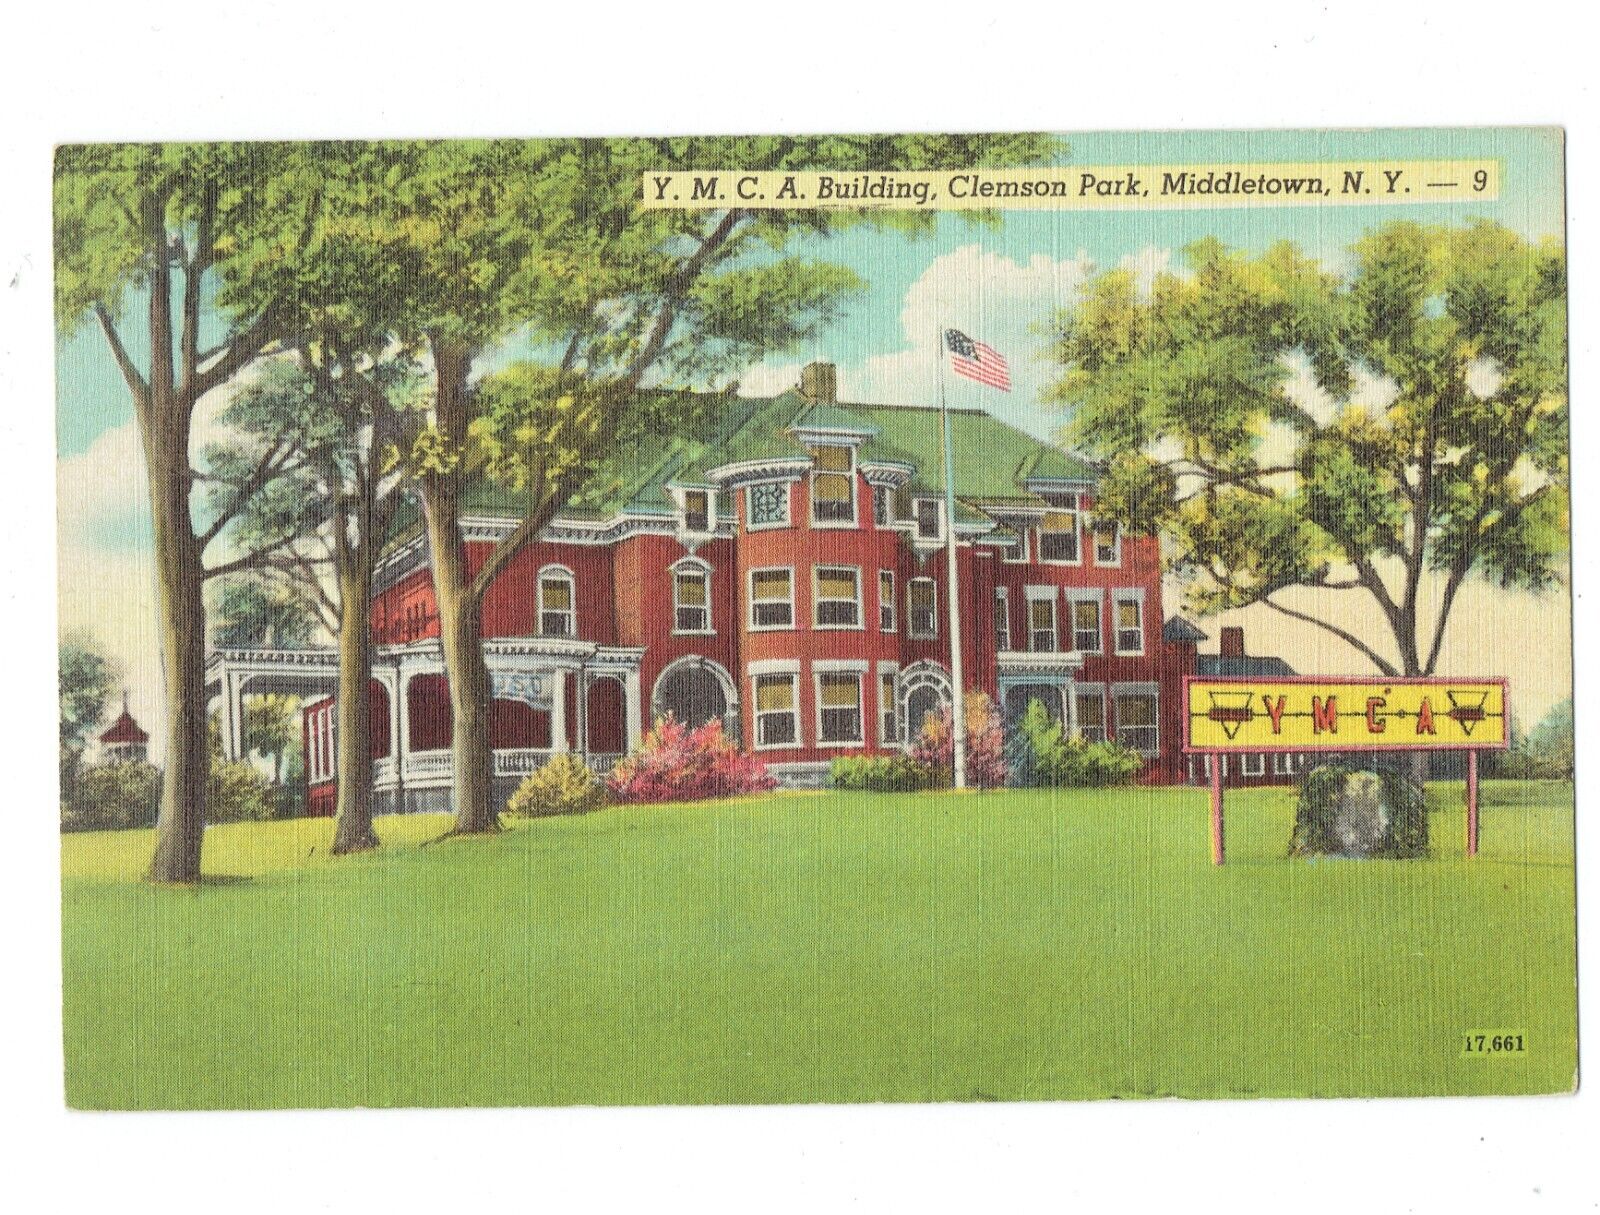 Postcards Vin (1)NY, Middletown Y.M.C.A Bldg, Clemson Park 9/17,661 P 1947 (280